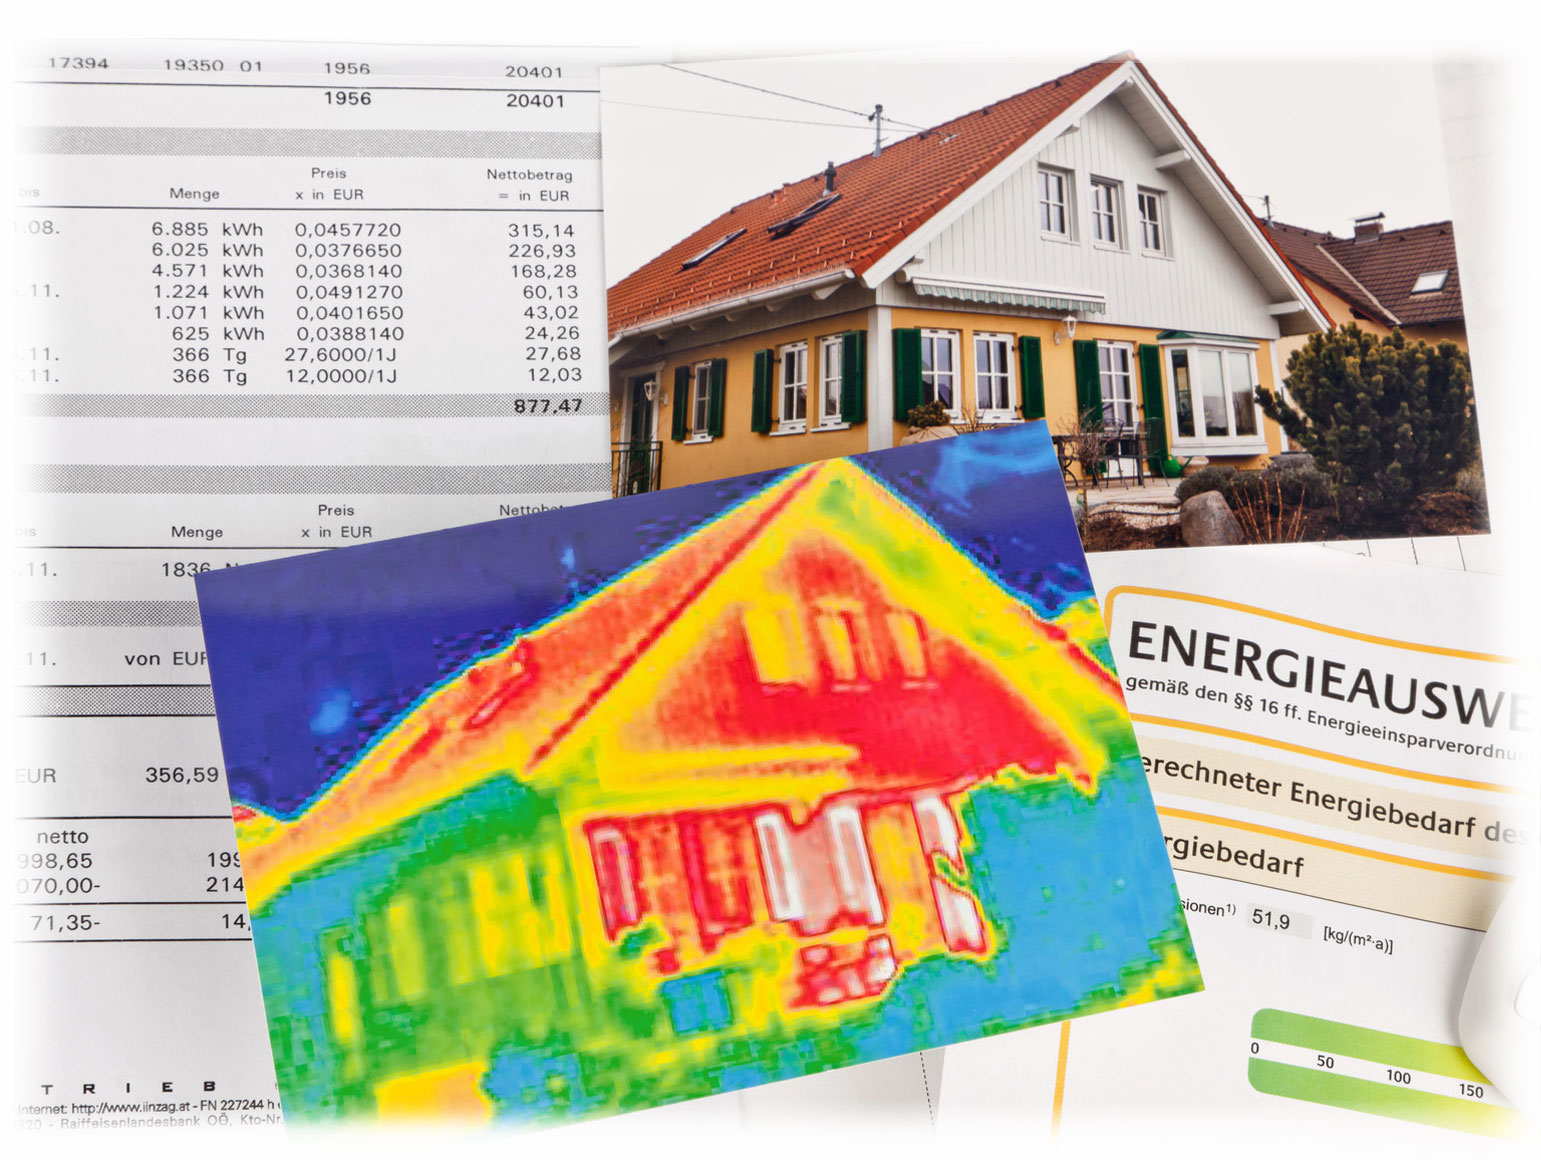 ARCHI-VISION SARL Suisse, thermographie infrarouge, audit thermique energetique, expertise batiment à Genève